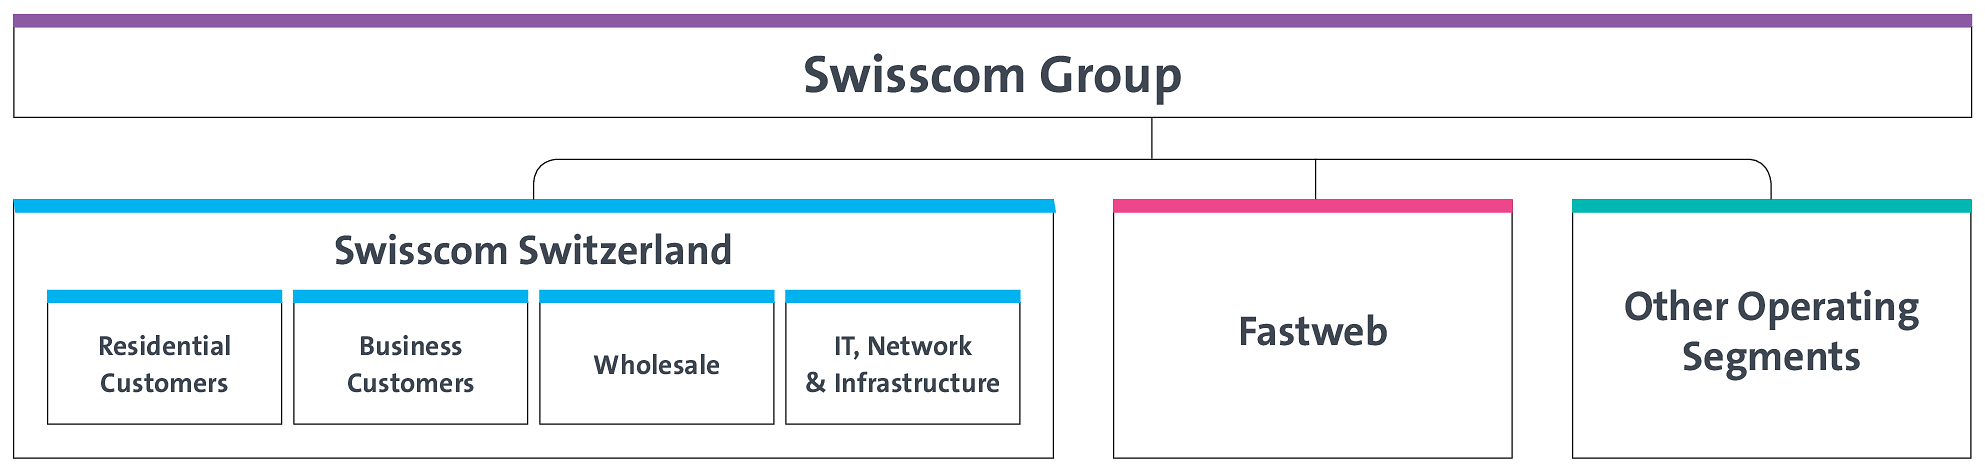 WSGE_DP_GR_Swisscom_Segmente